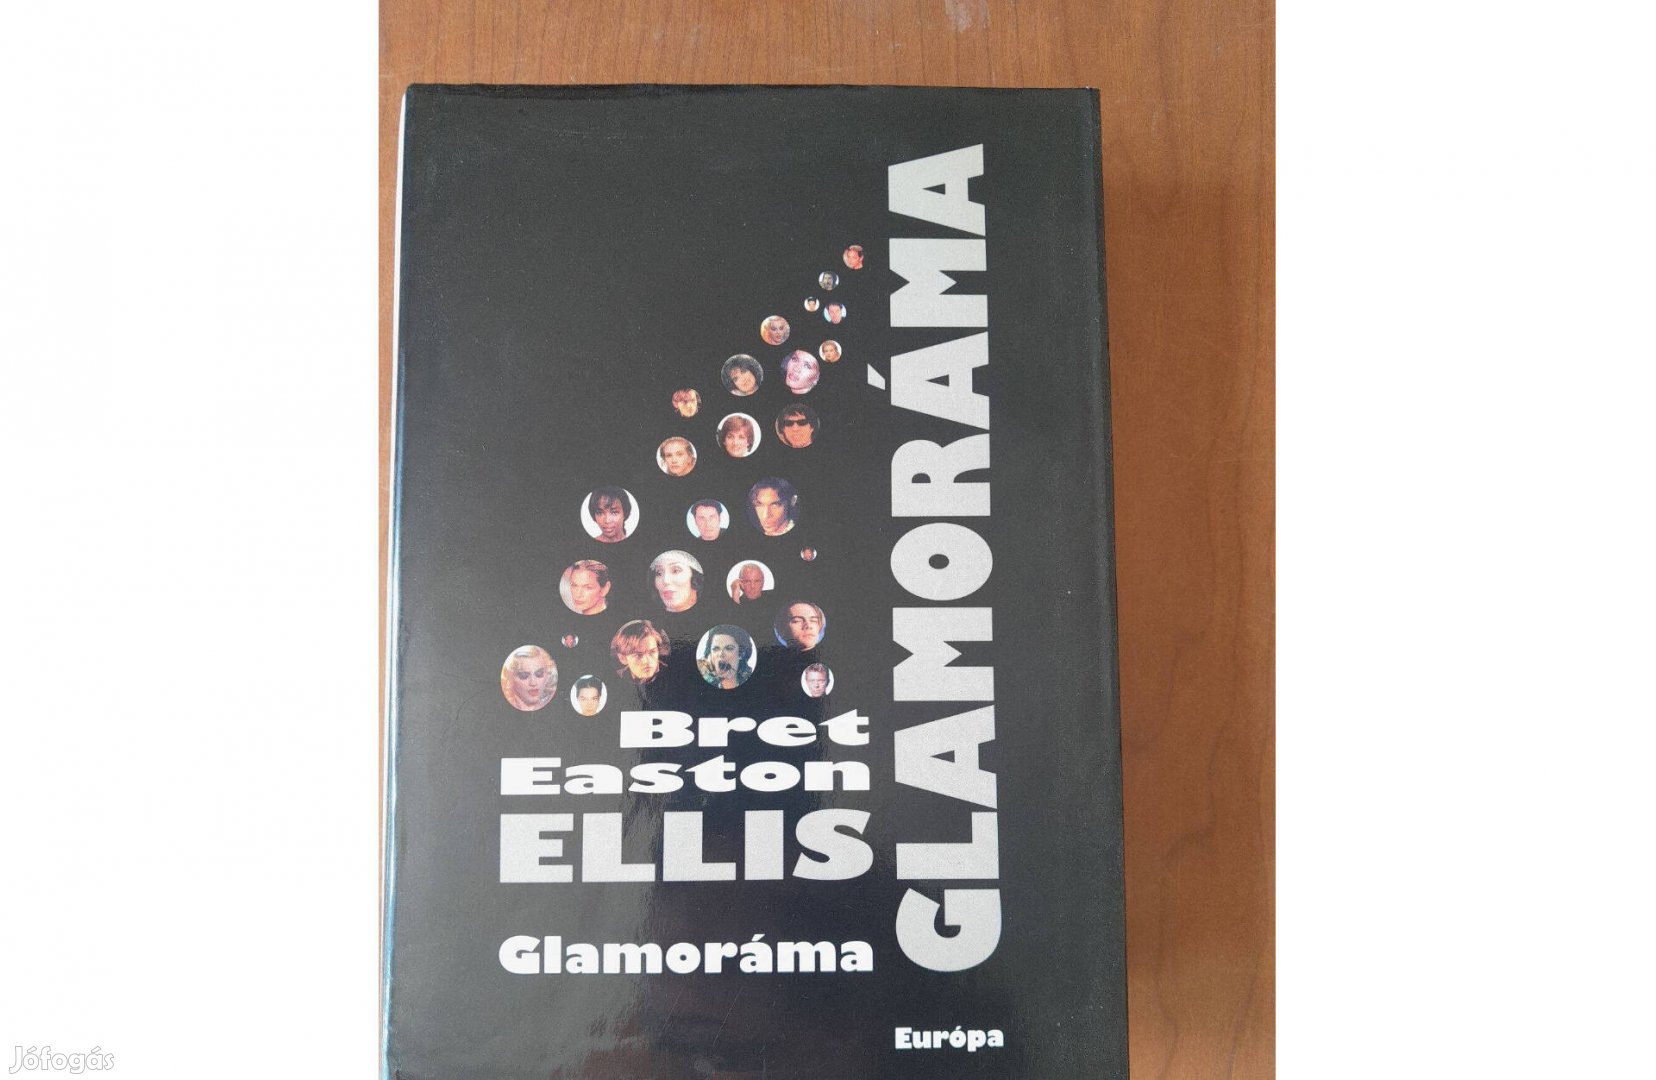 Ellis - Glamoráma